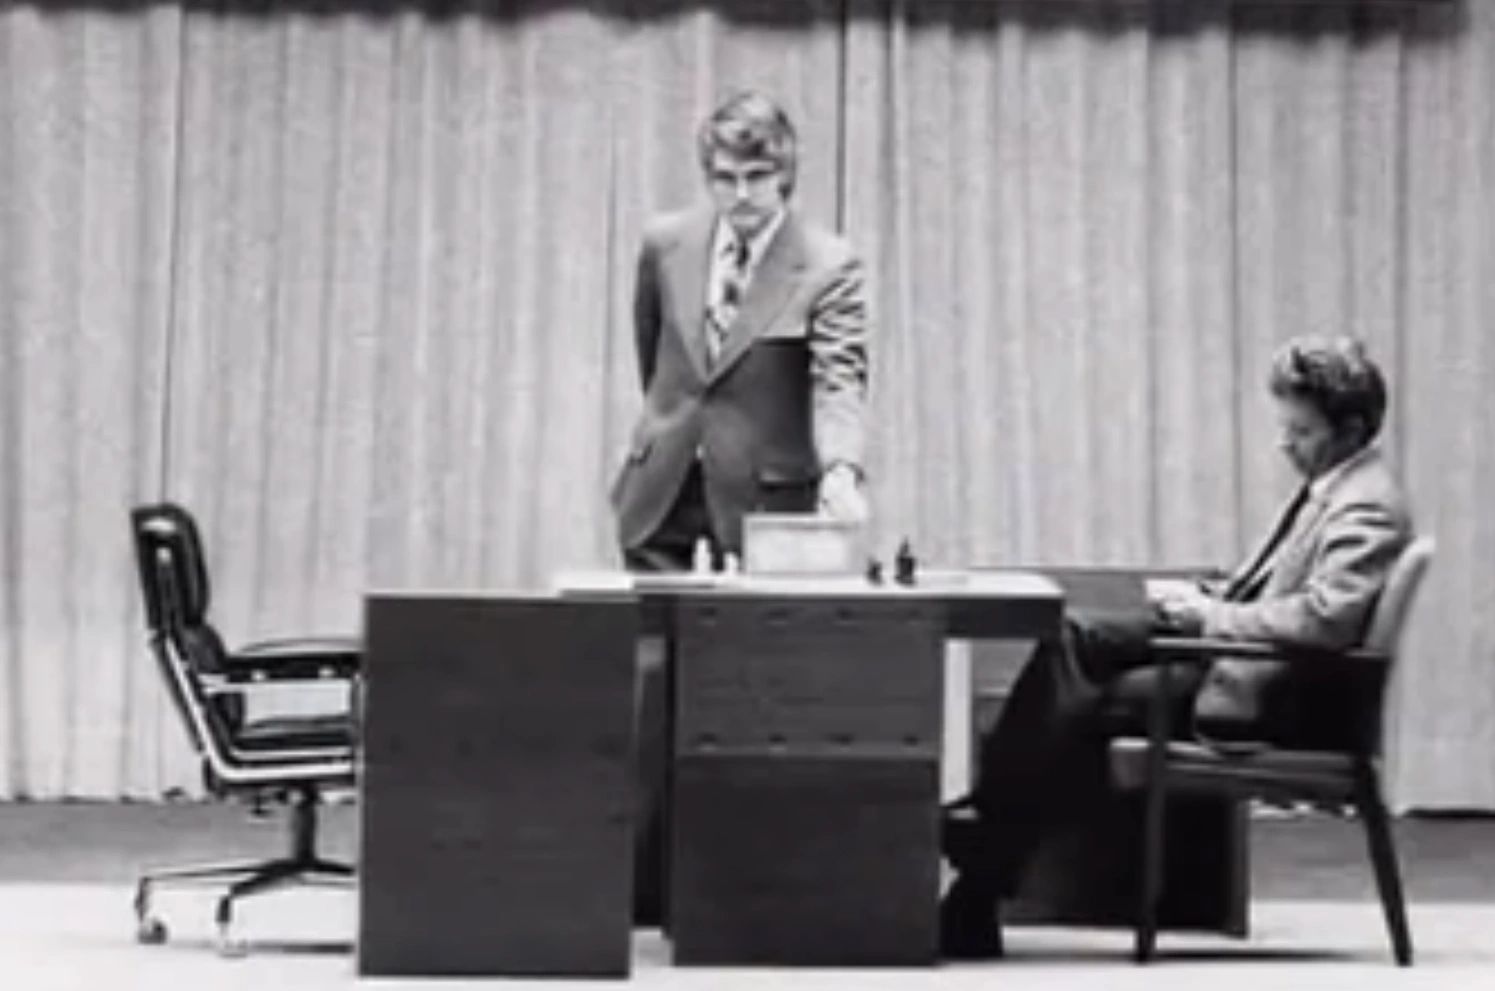 The 1972 Fischer-Spassky games captured public imagination across